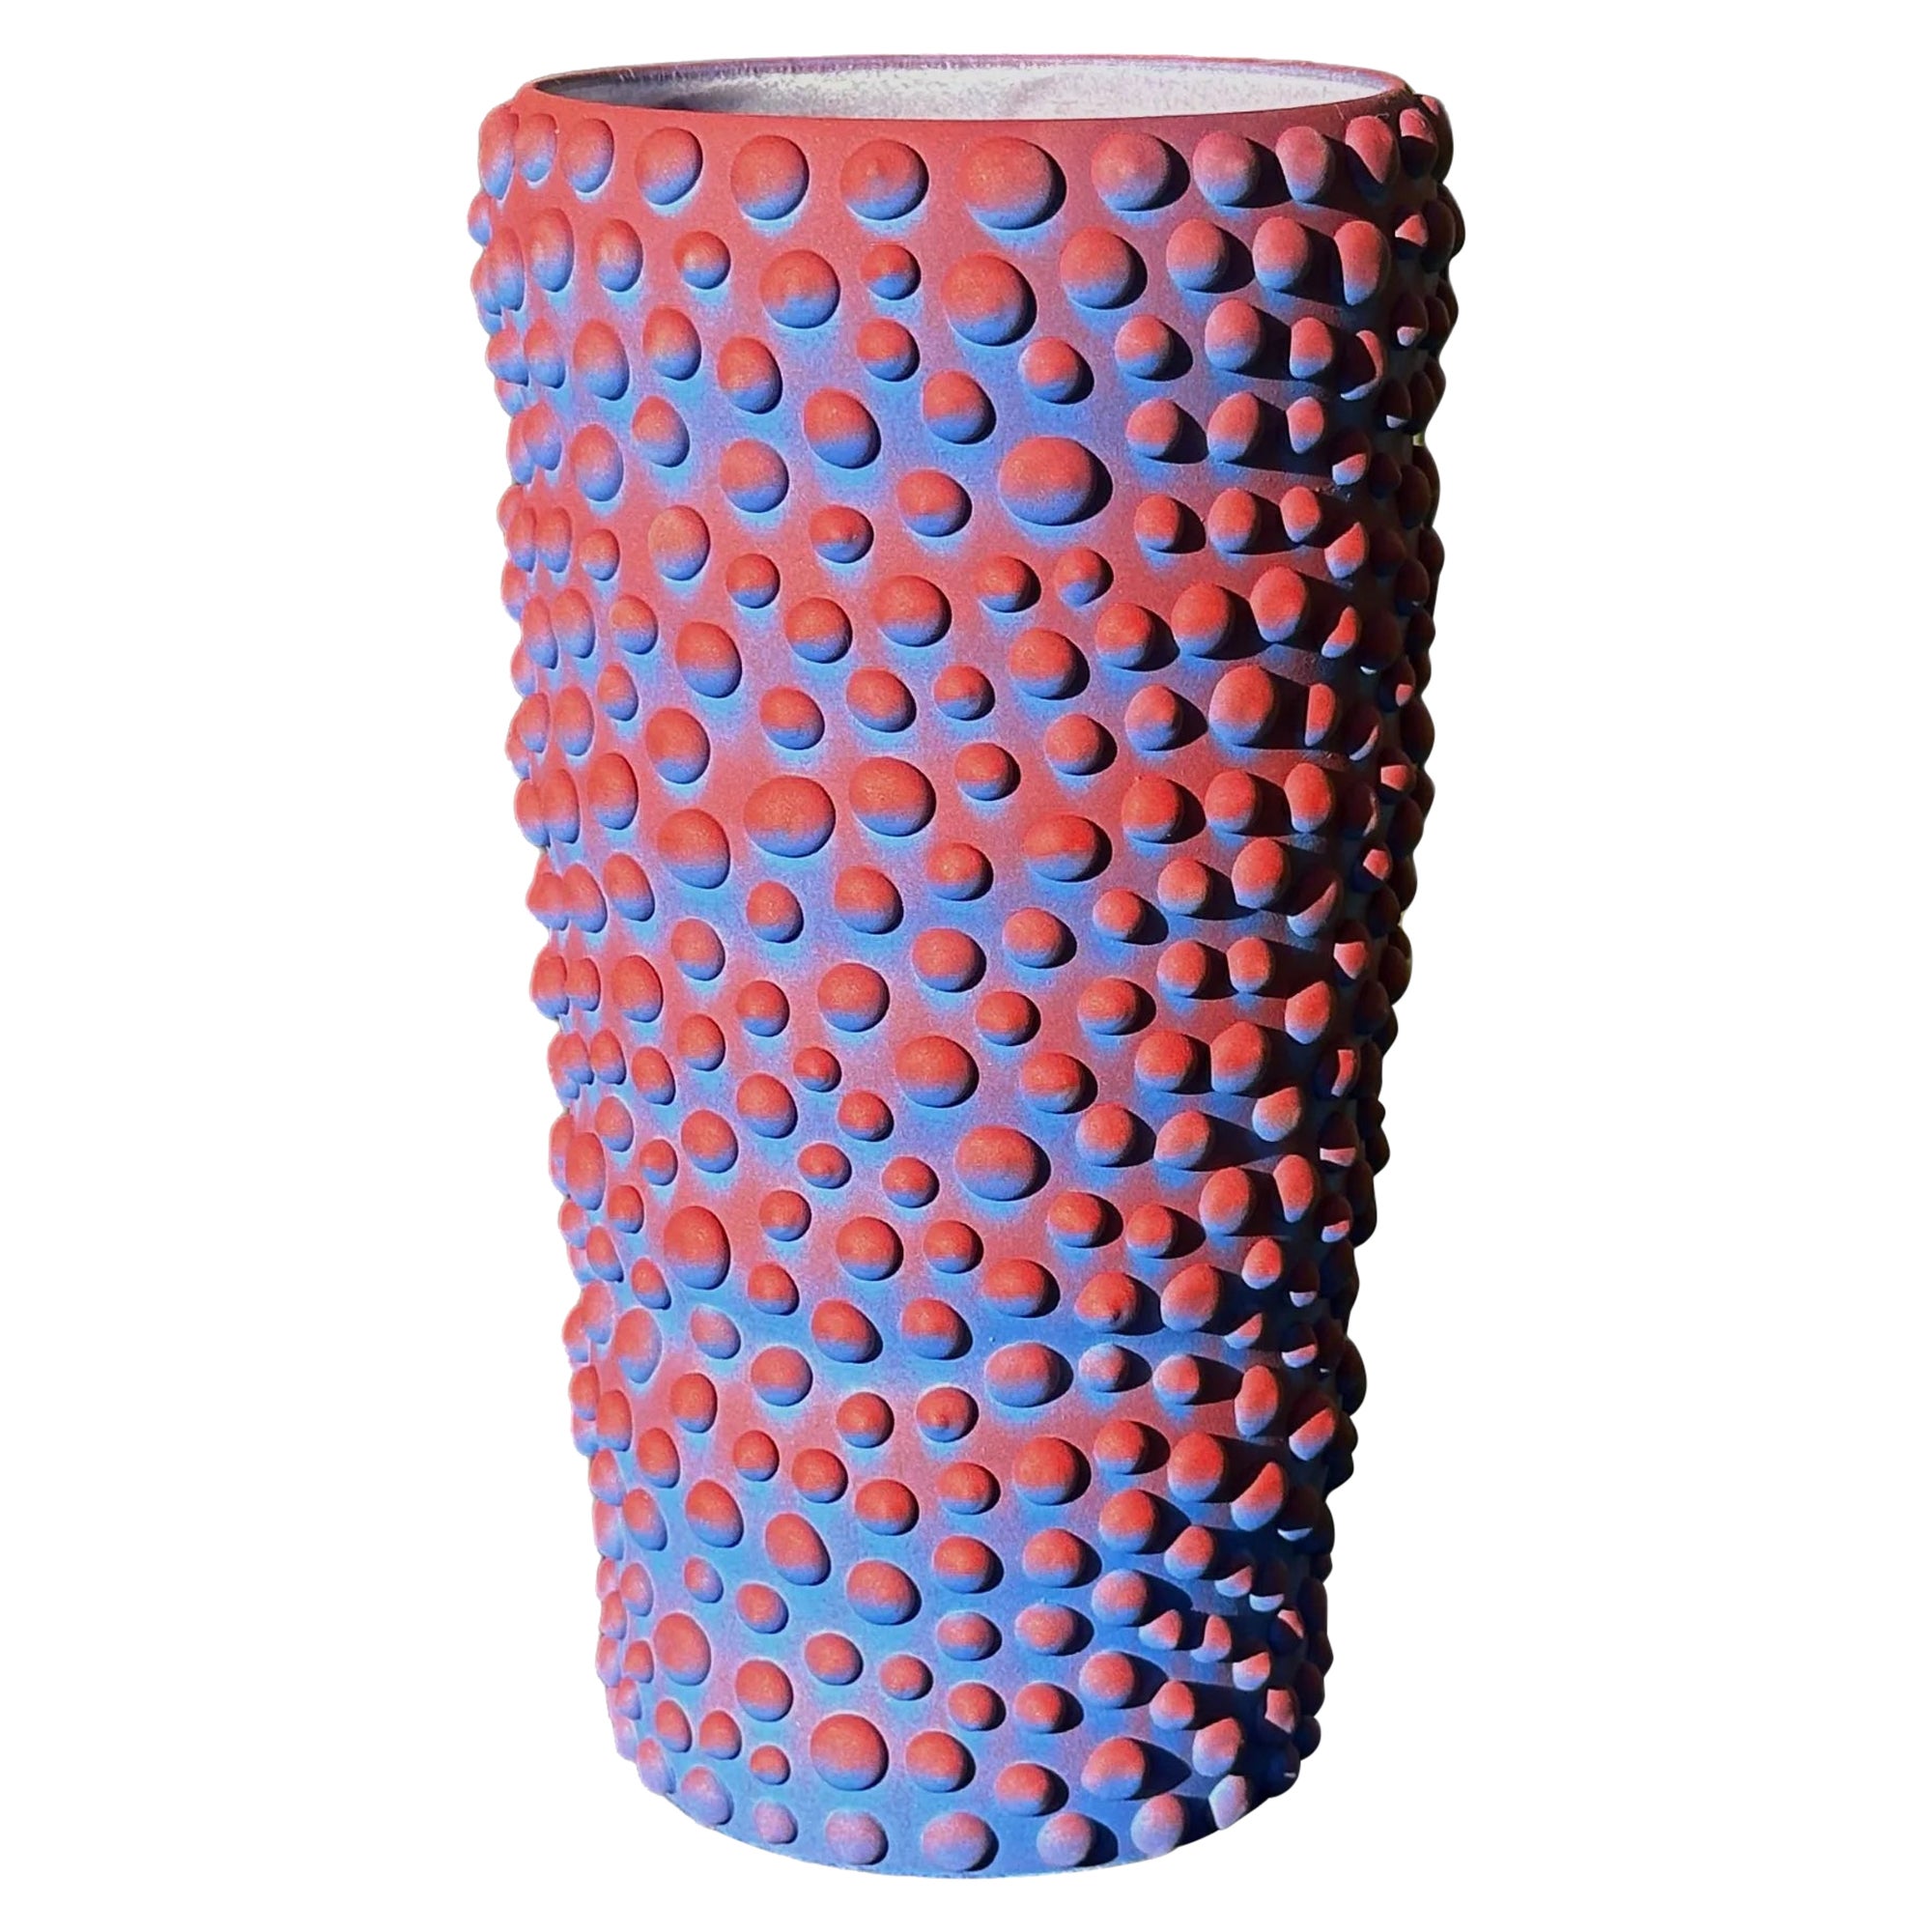 Blurple And Vermillion Organic Dot Ombre Vase For Sale